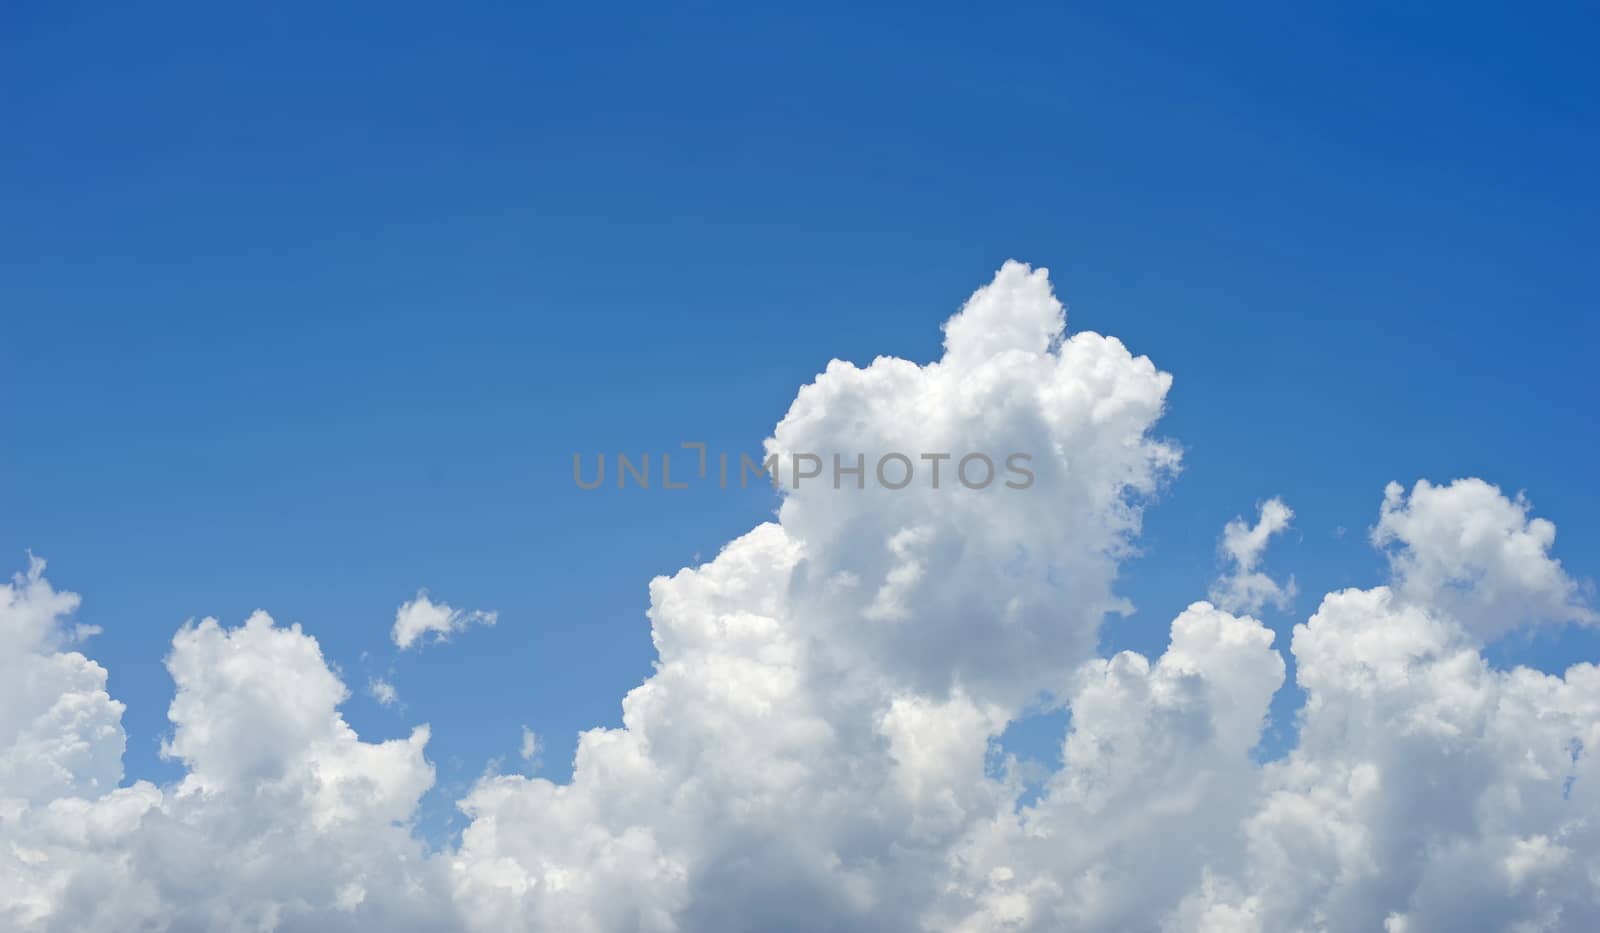 cloud on blue sky by leisuretime70